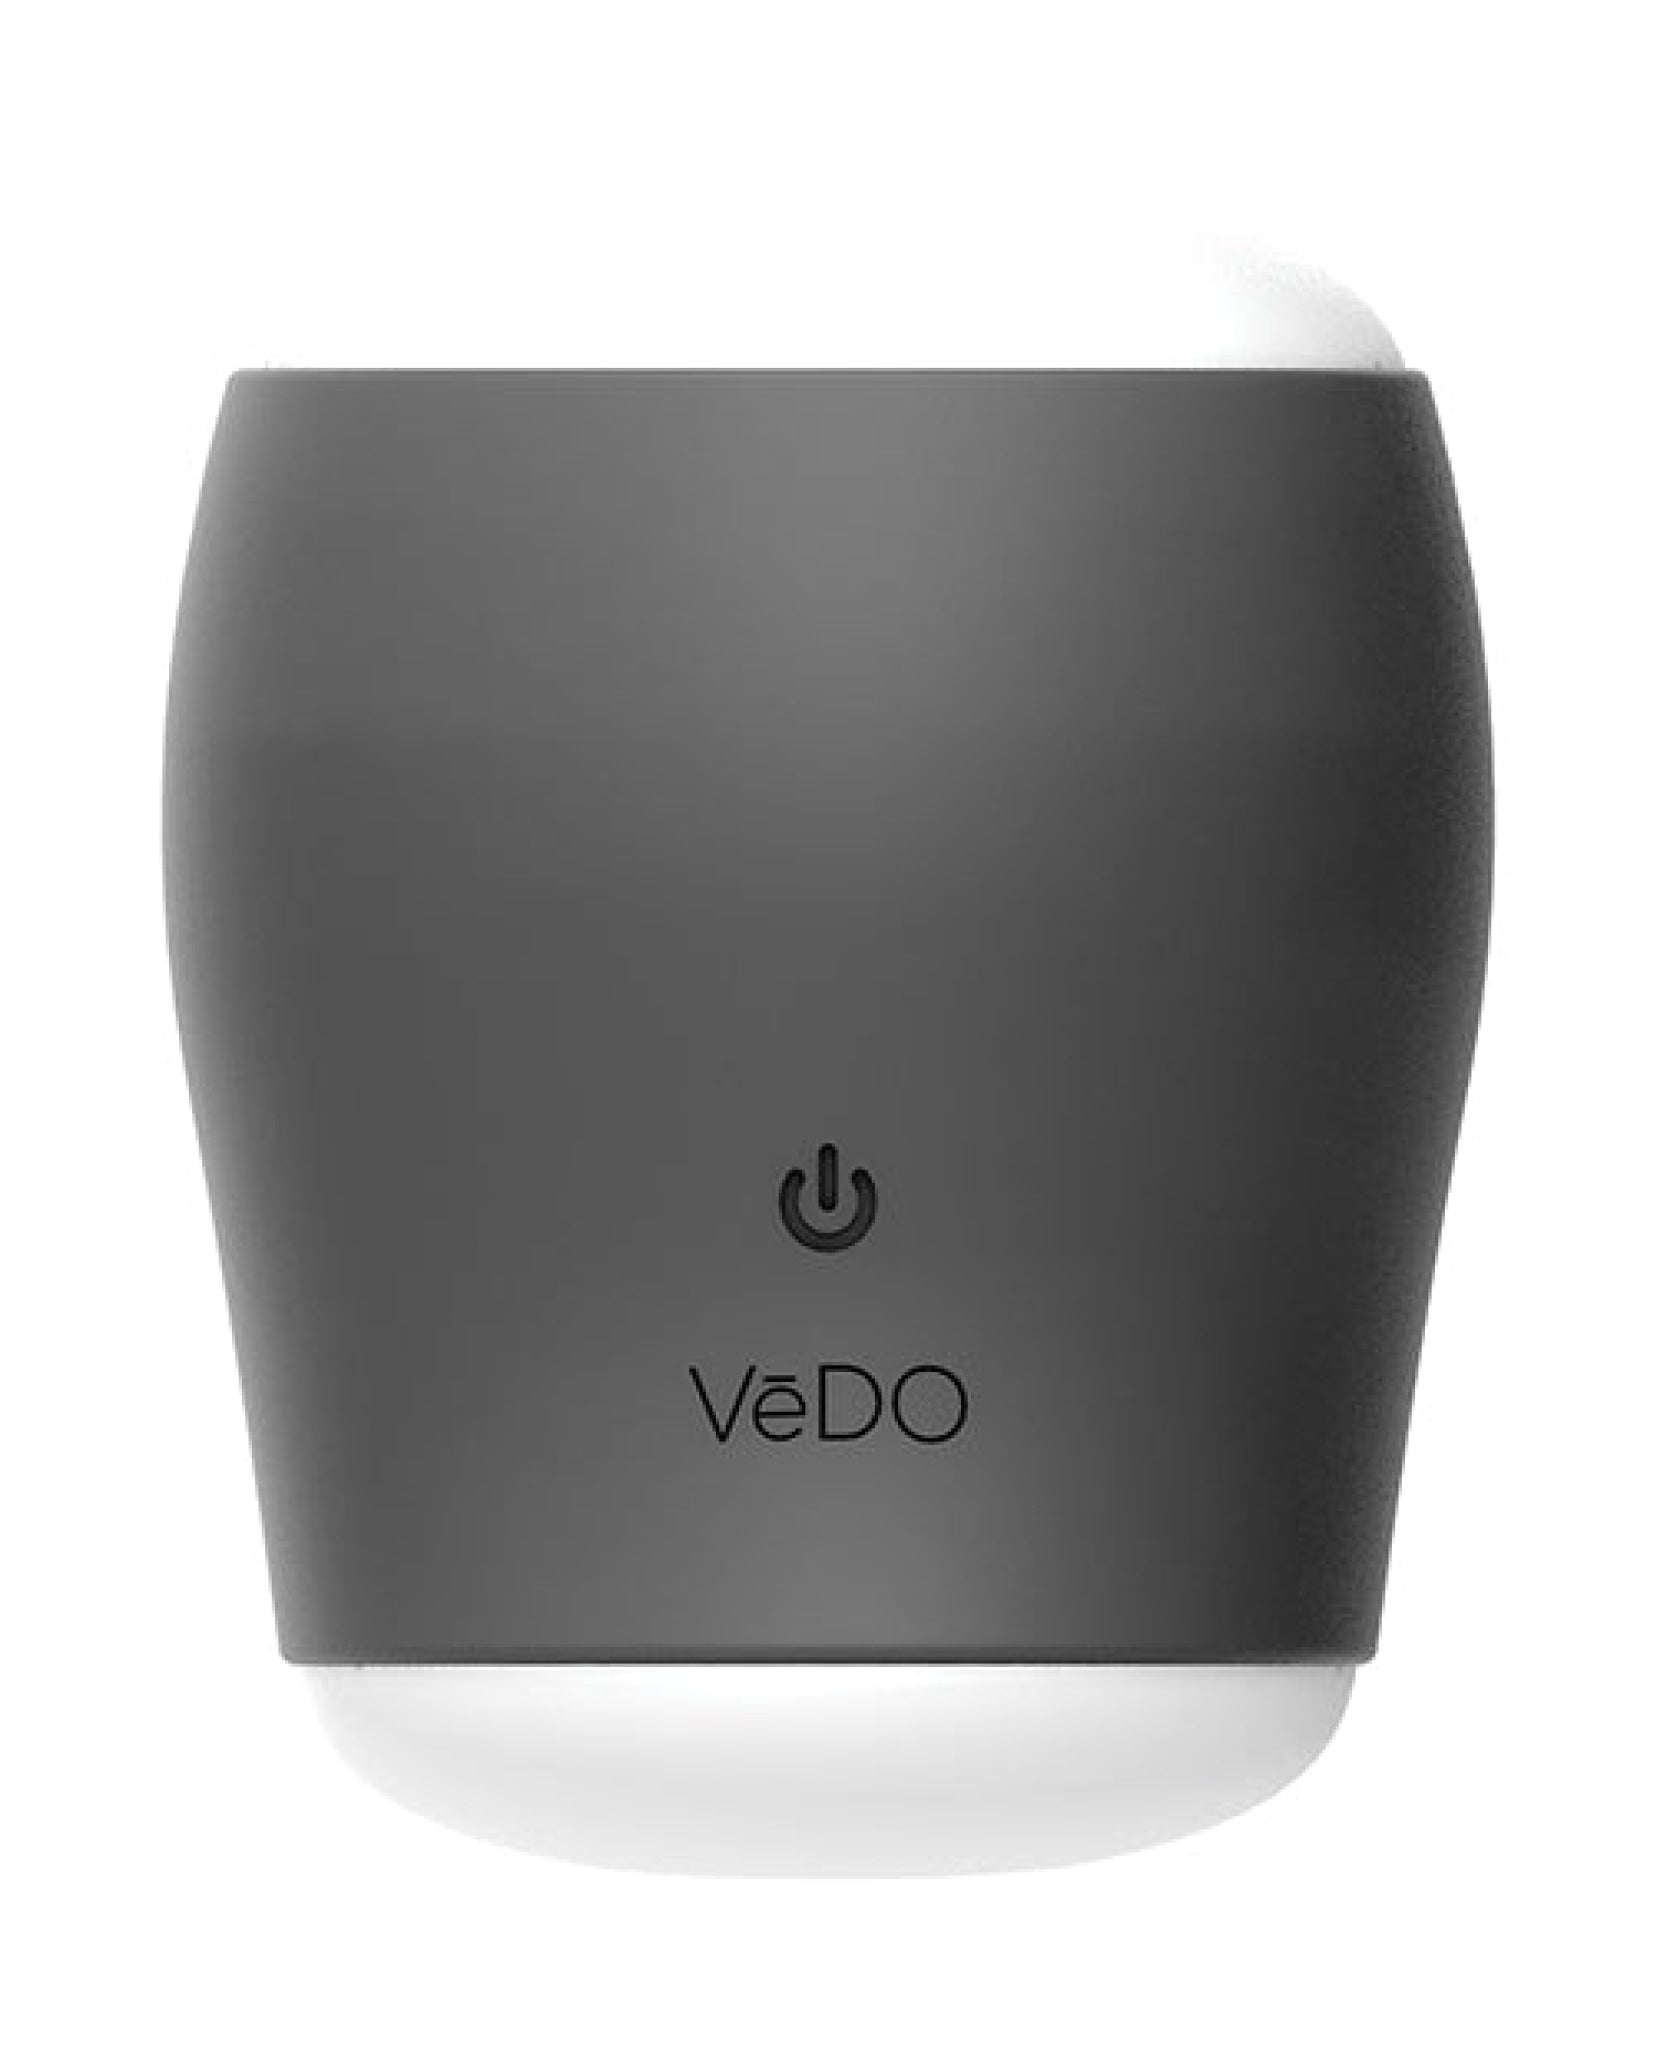 Vedo Grip Rechargeable Vibrating Sleeve - Just Black VēDO